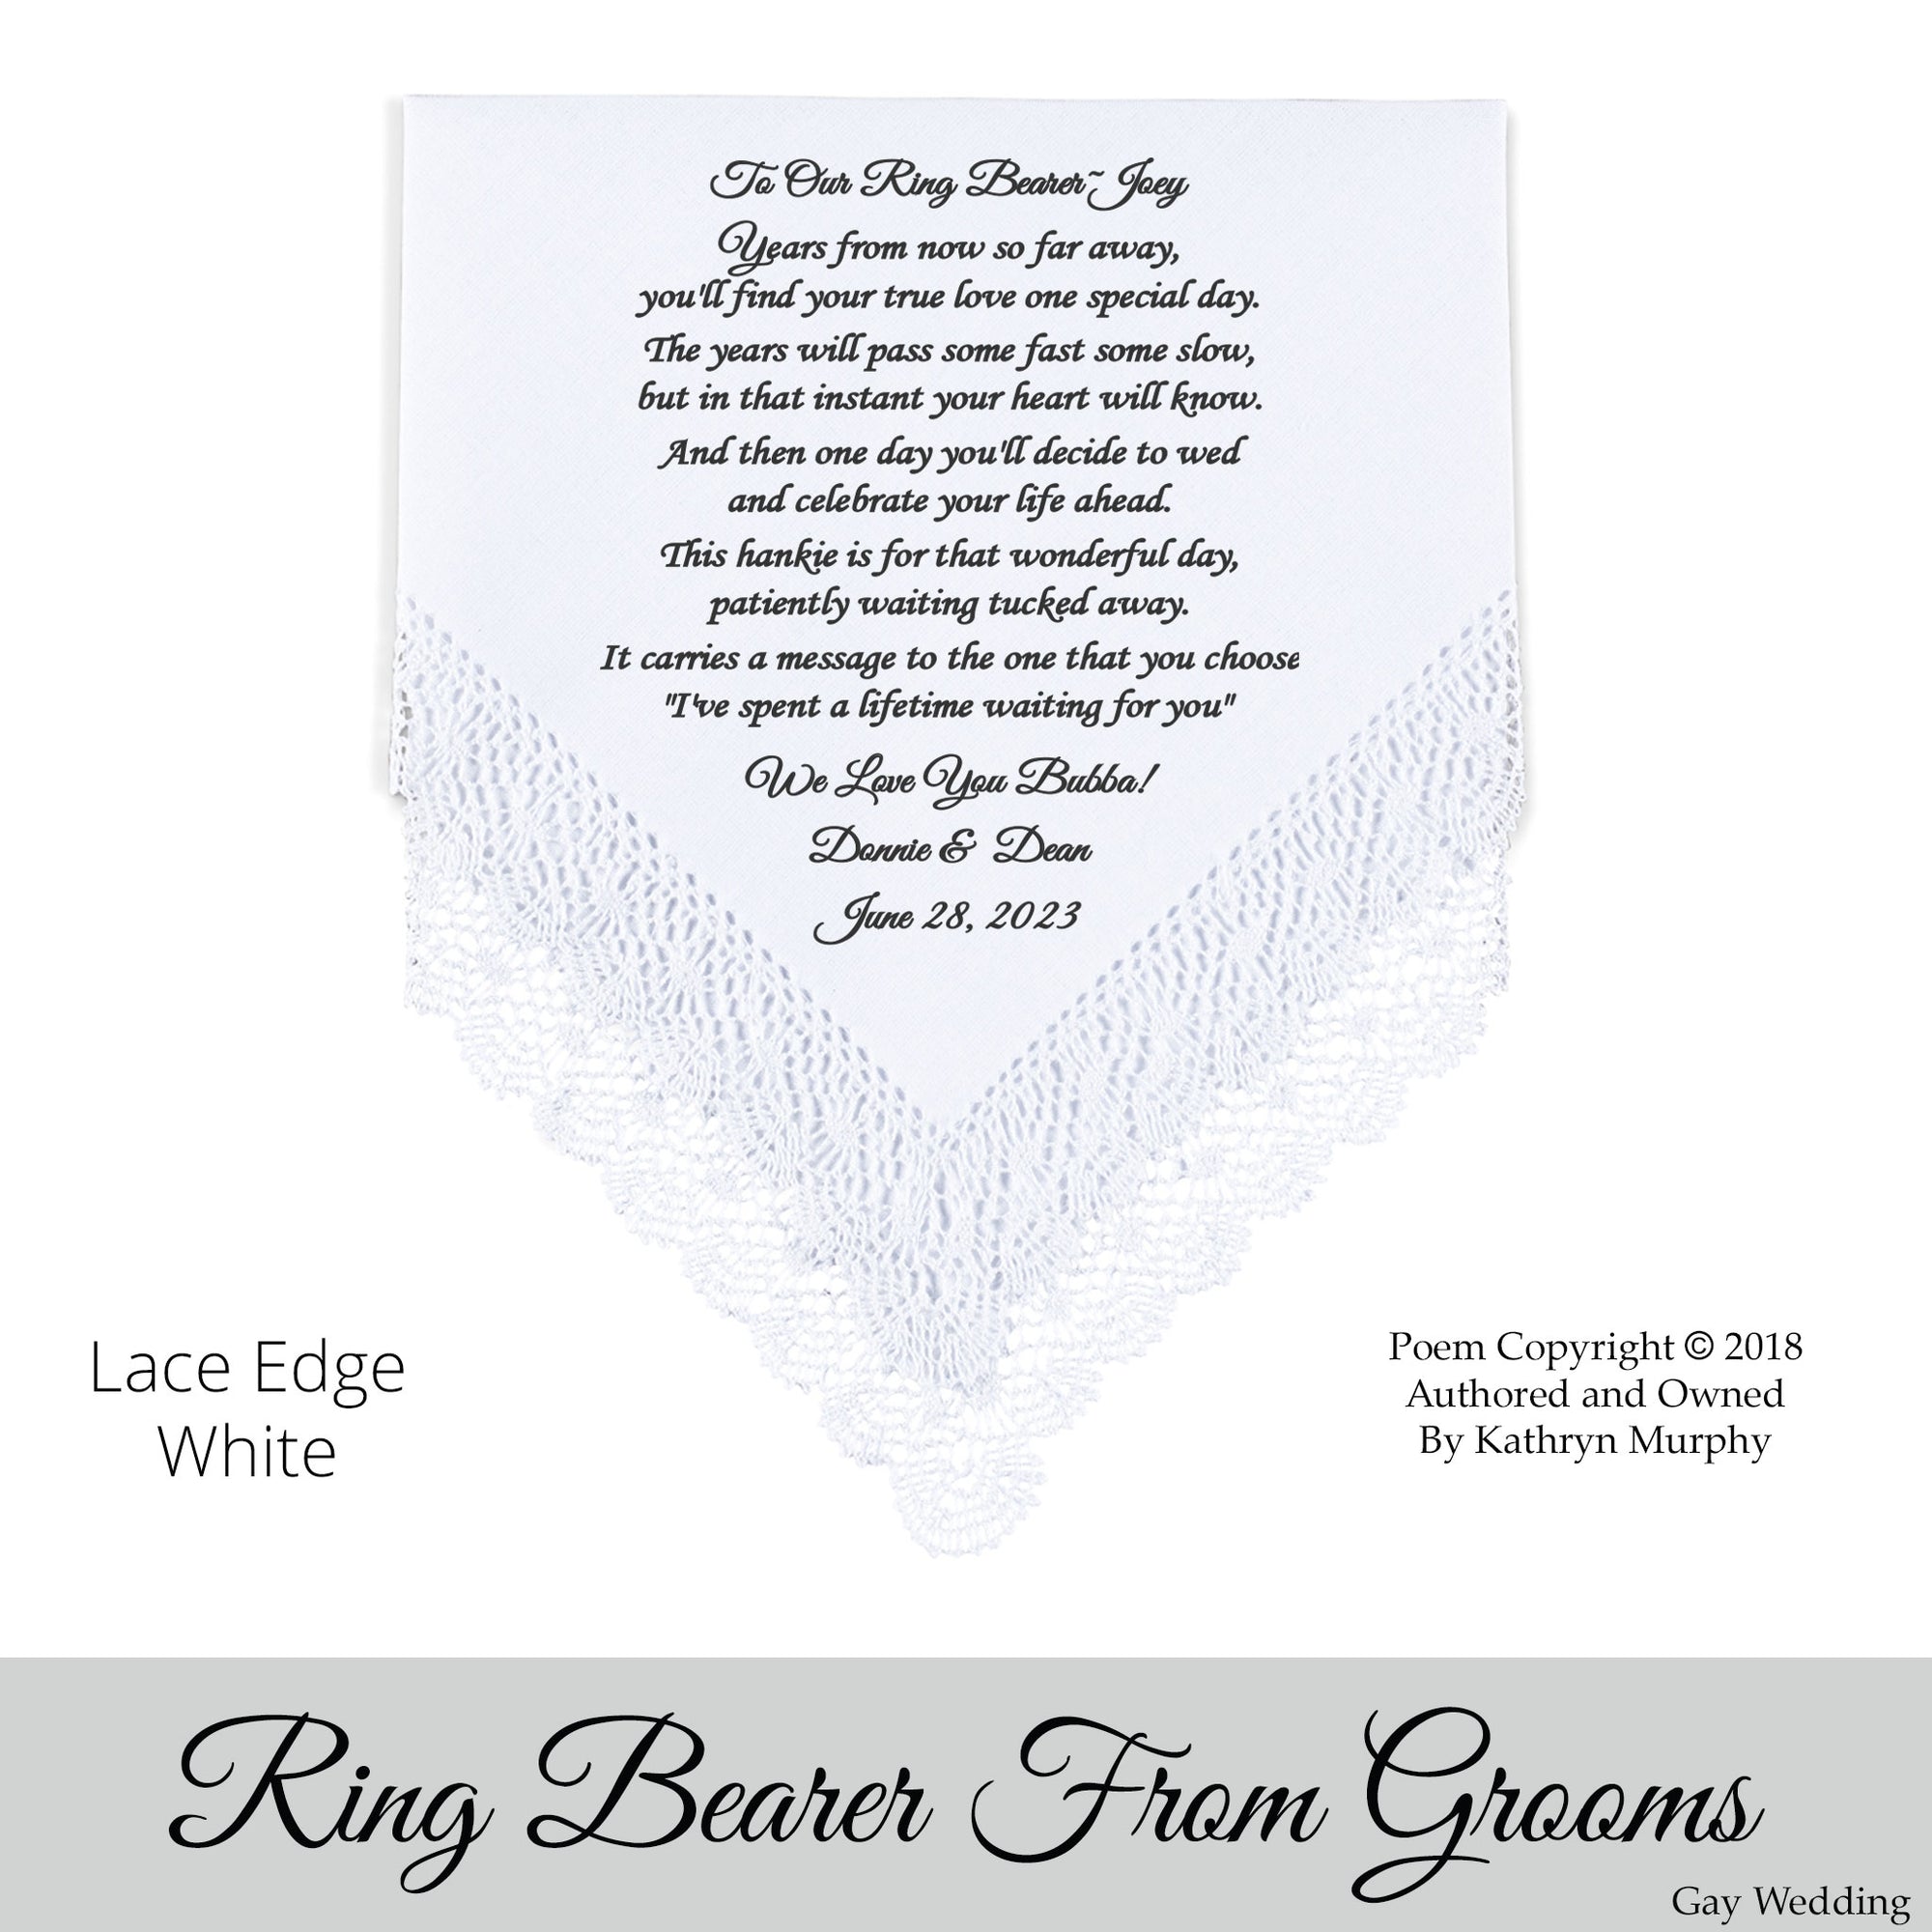 Gay Wedding Gift for the Ring Bearer poem printed wedding hankie